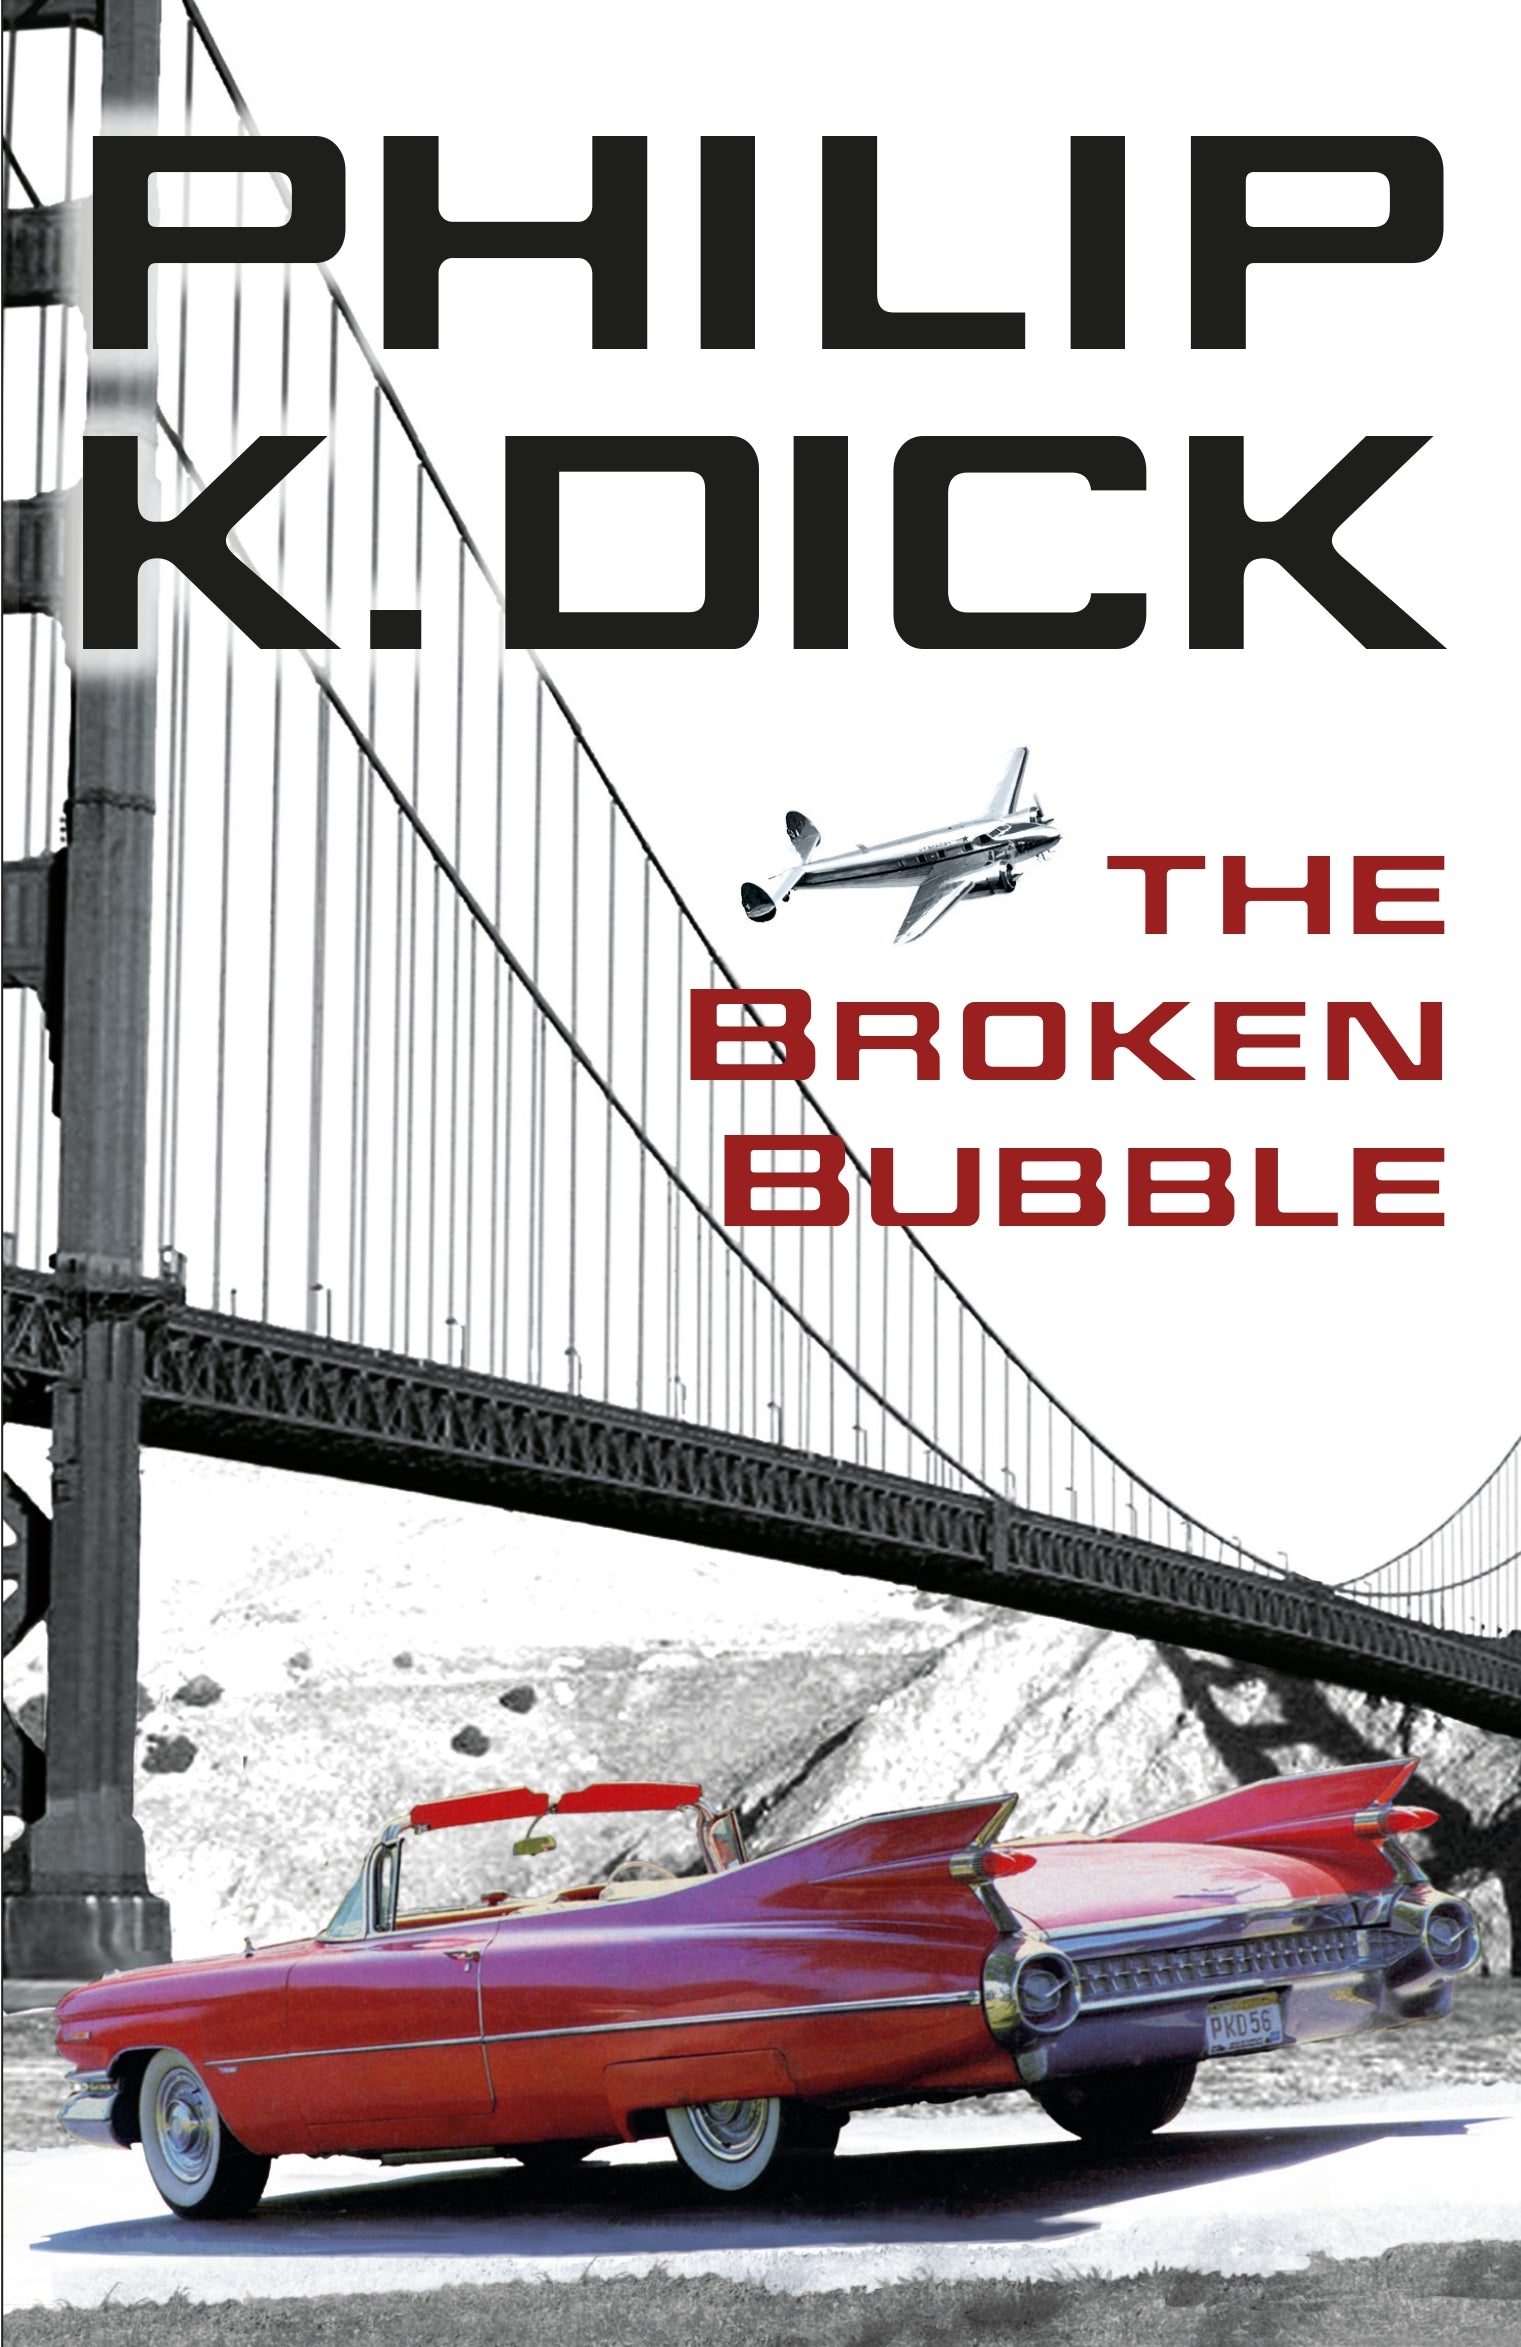 The Broken Bubble by Philip K Dick